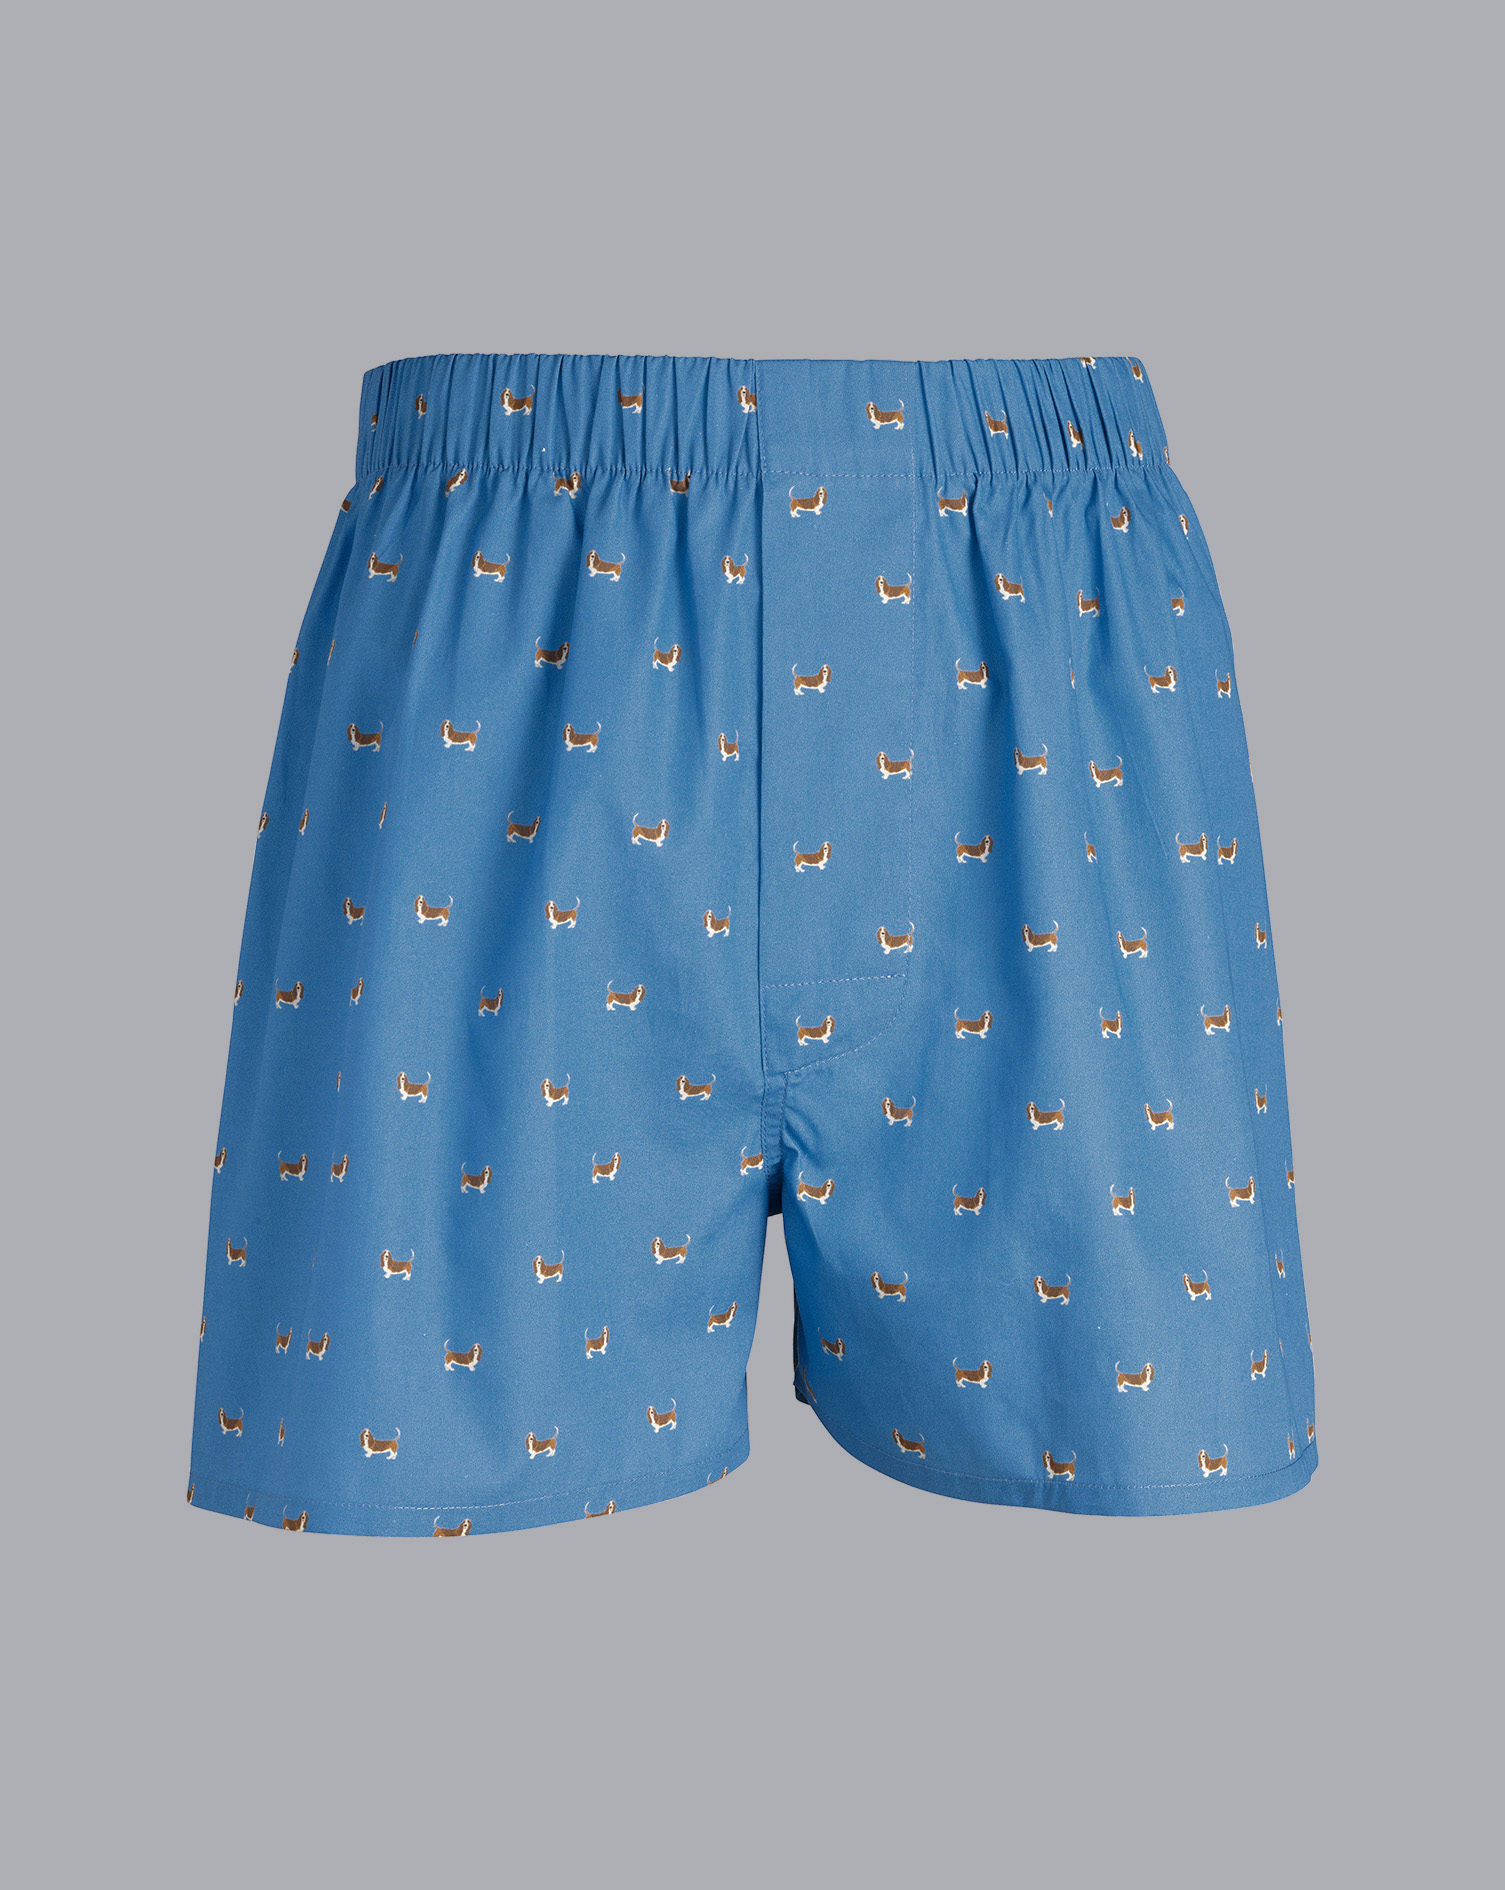 Men's Charles Tyrwhitt Basset Hound Woven Boxers - Ocean Blue Size XXL Cotton
